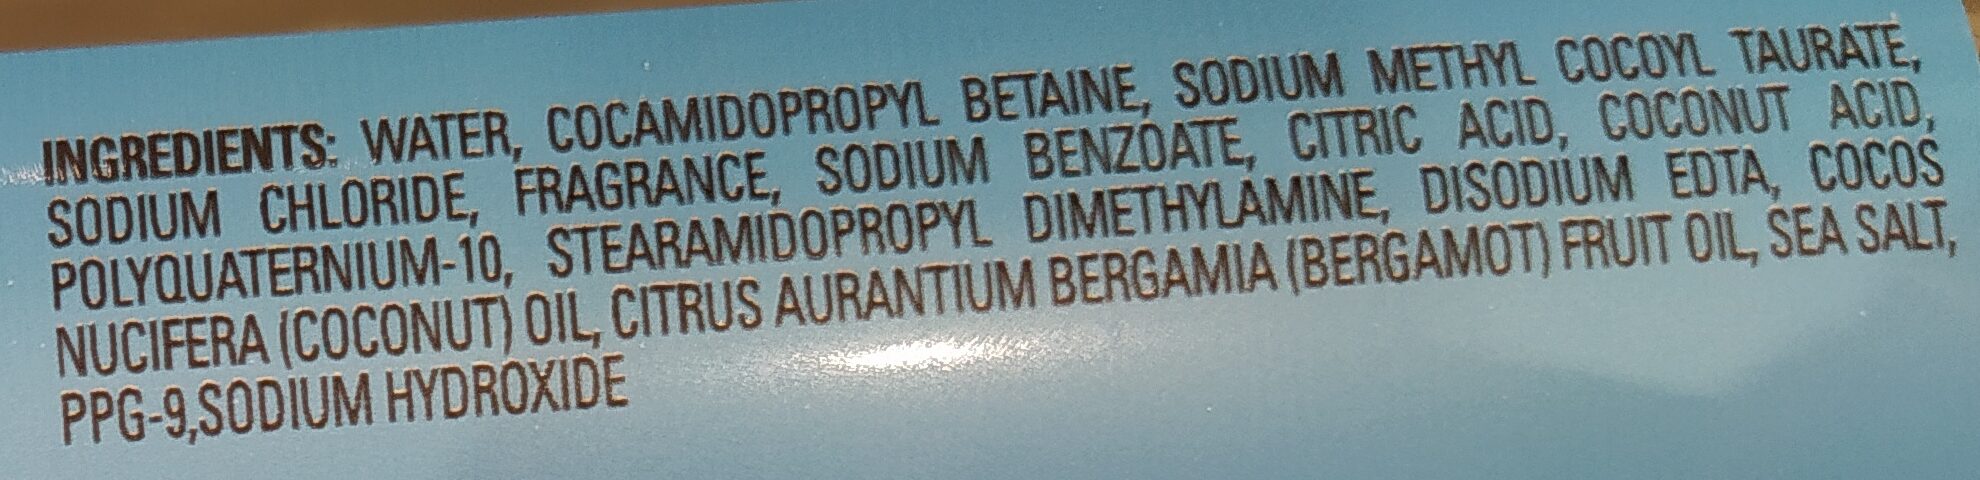 Sea Salt & Bergamot Shampoo - Ingredients - en